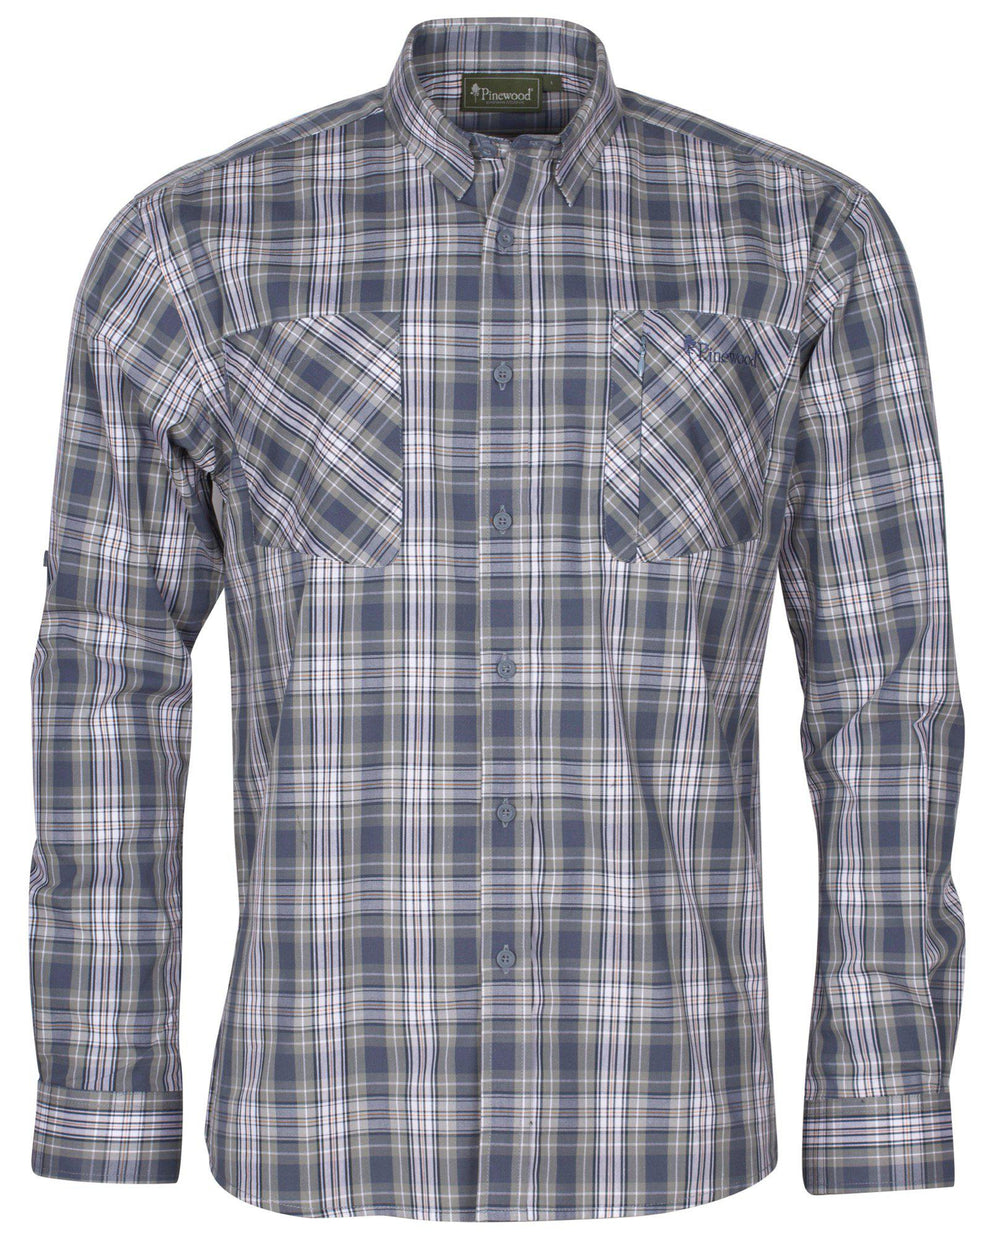 5337-341-01_Pinewood-Glenn-Shirt-Mens_Blue-Grey